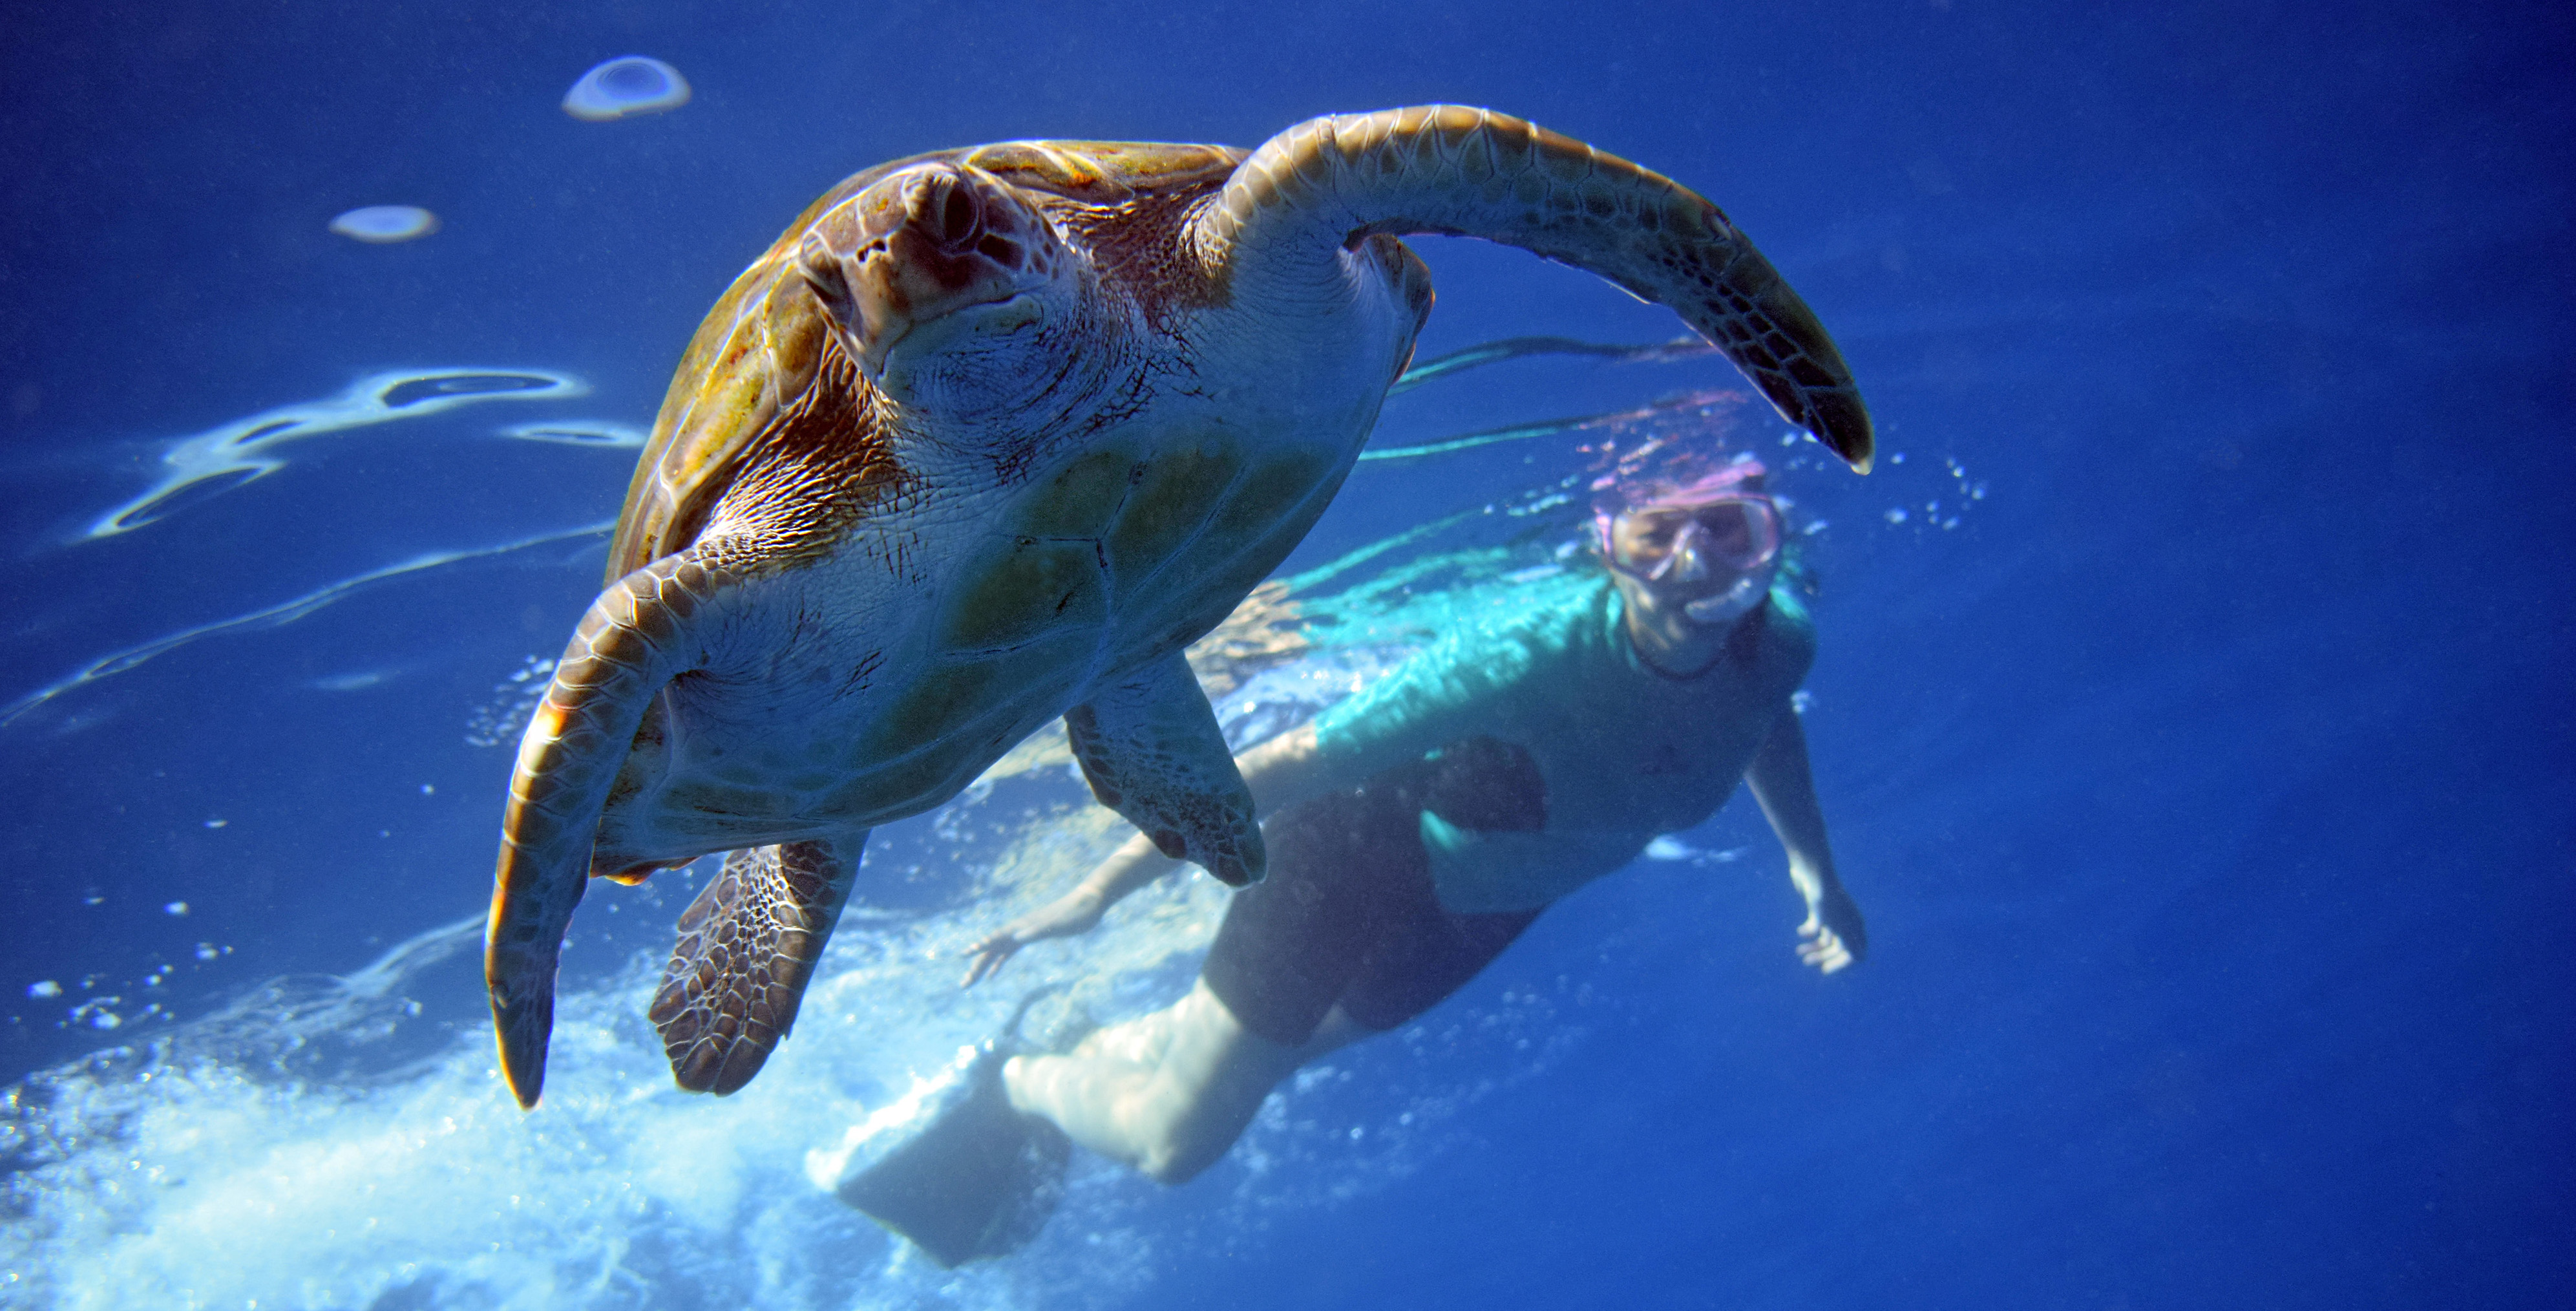 Snorkeling with turtles in Tenerife